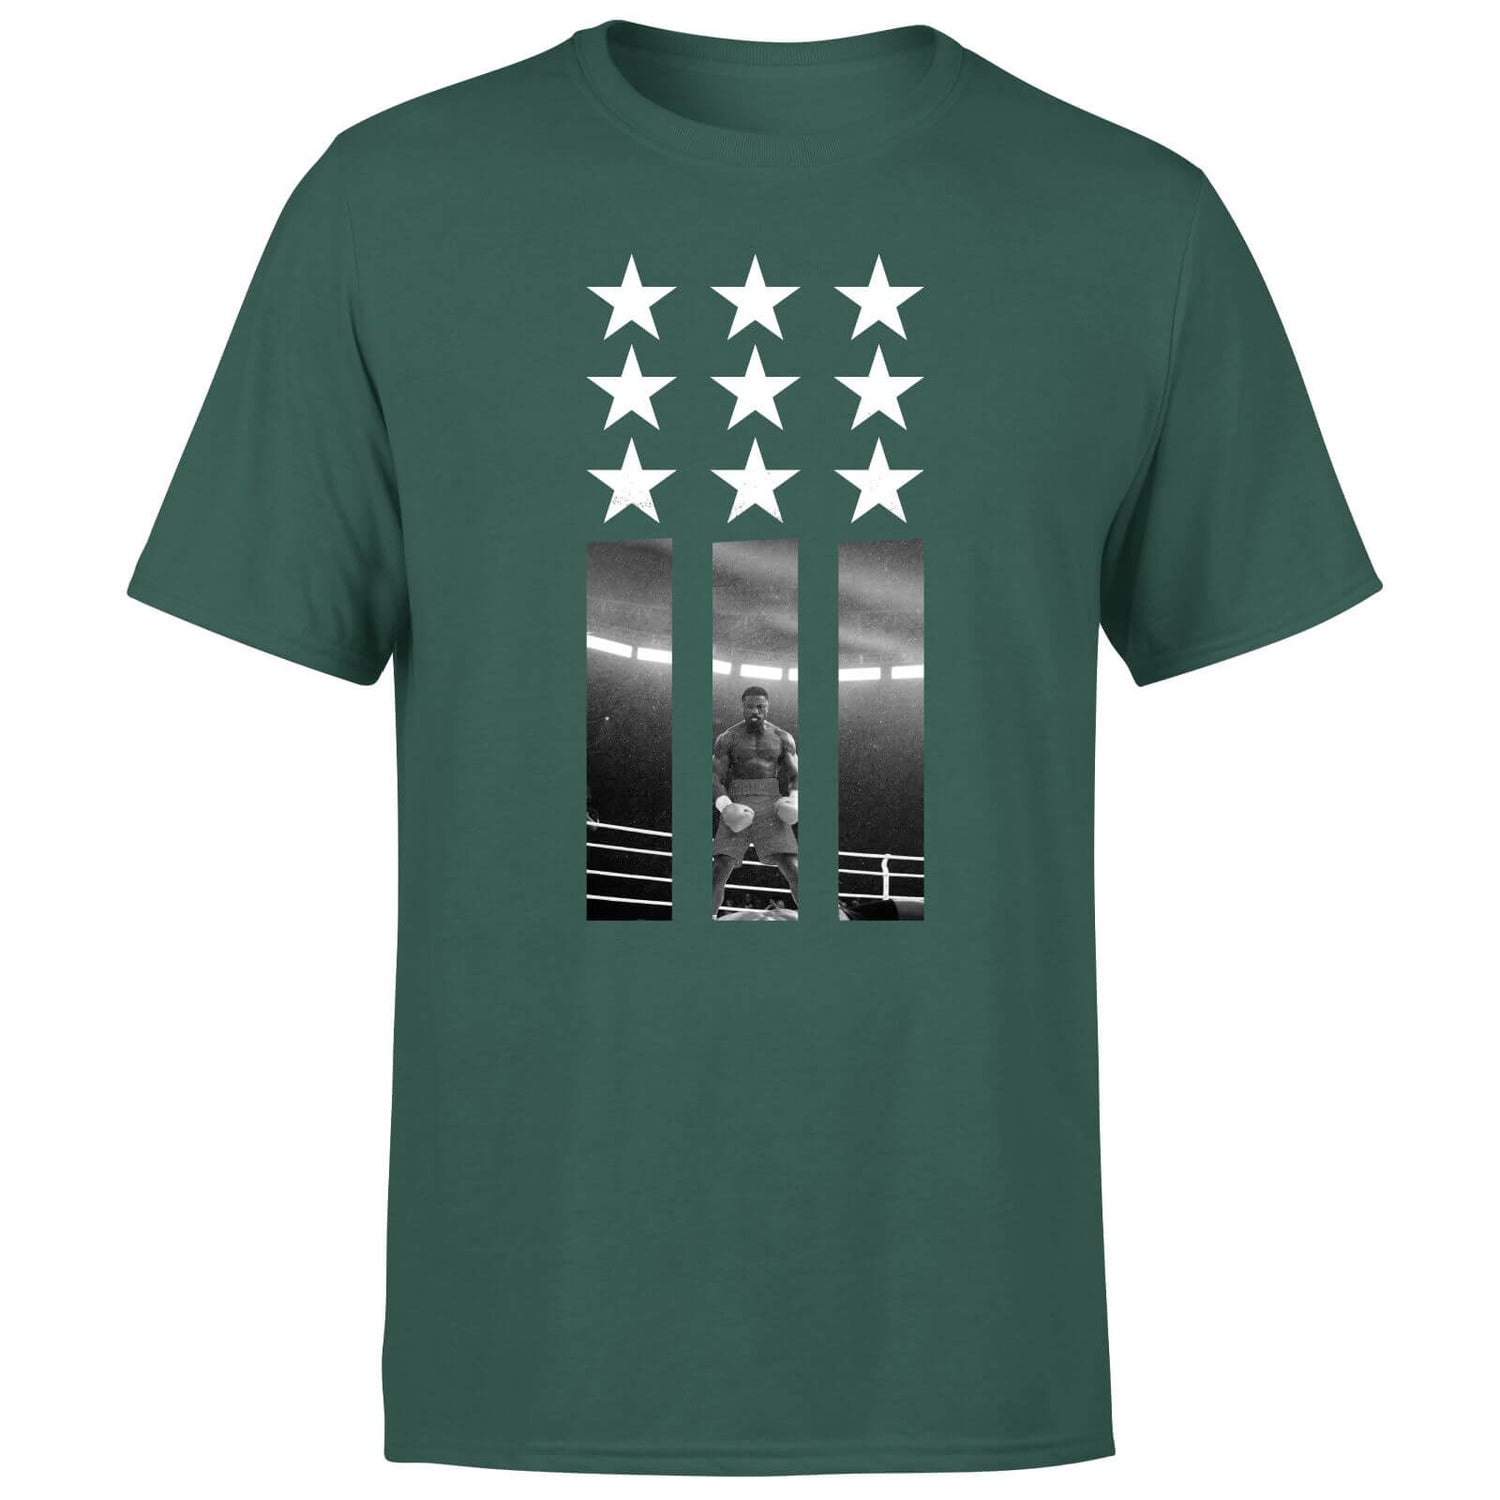 Creed Poster Stars Men's T-Shirt - Green